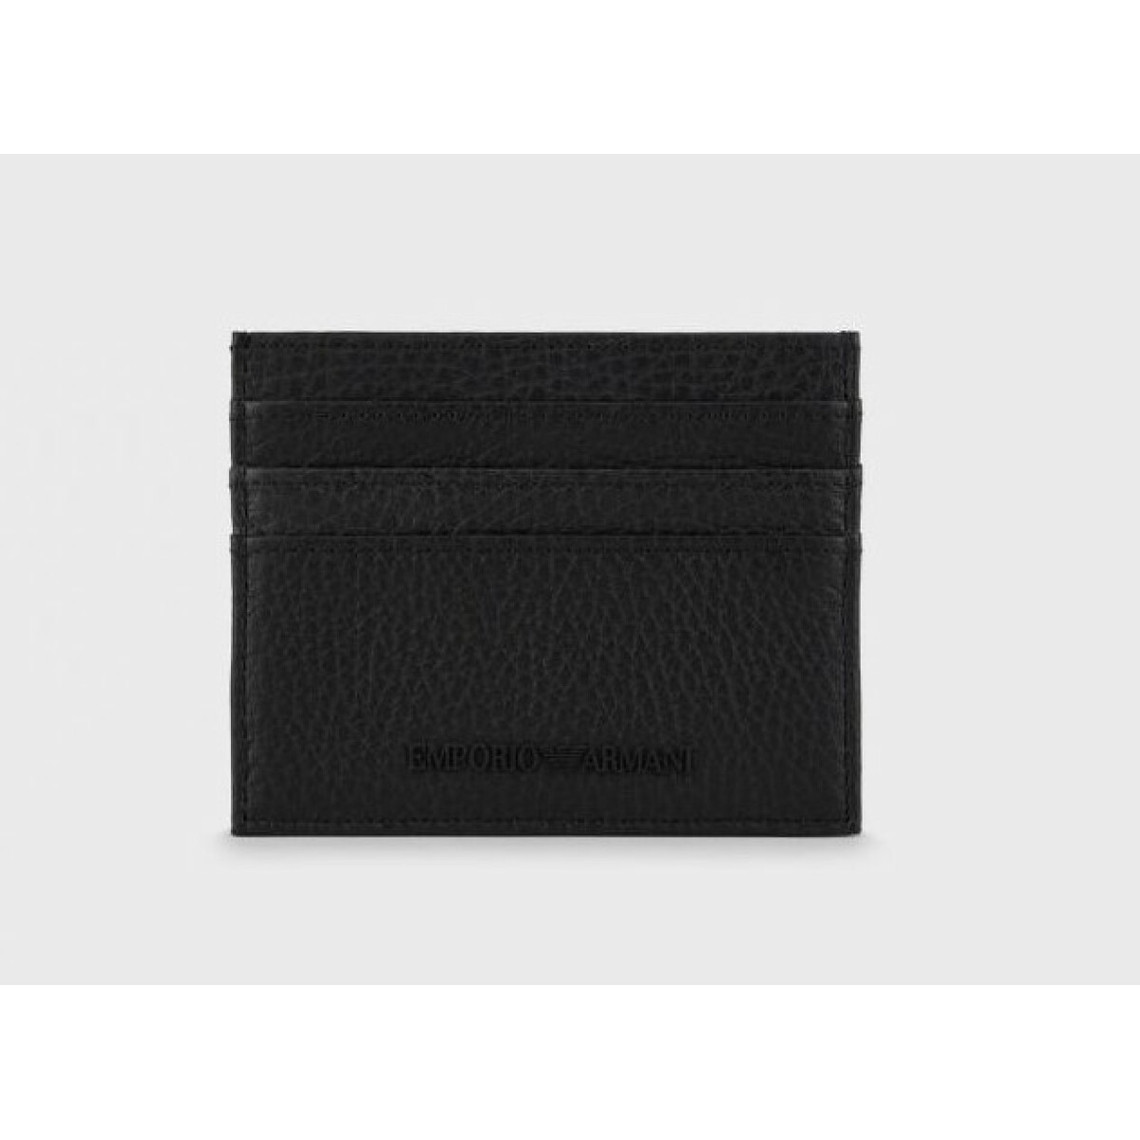 Porte-Carte - Credit Card Holder noir en cuir